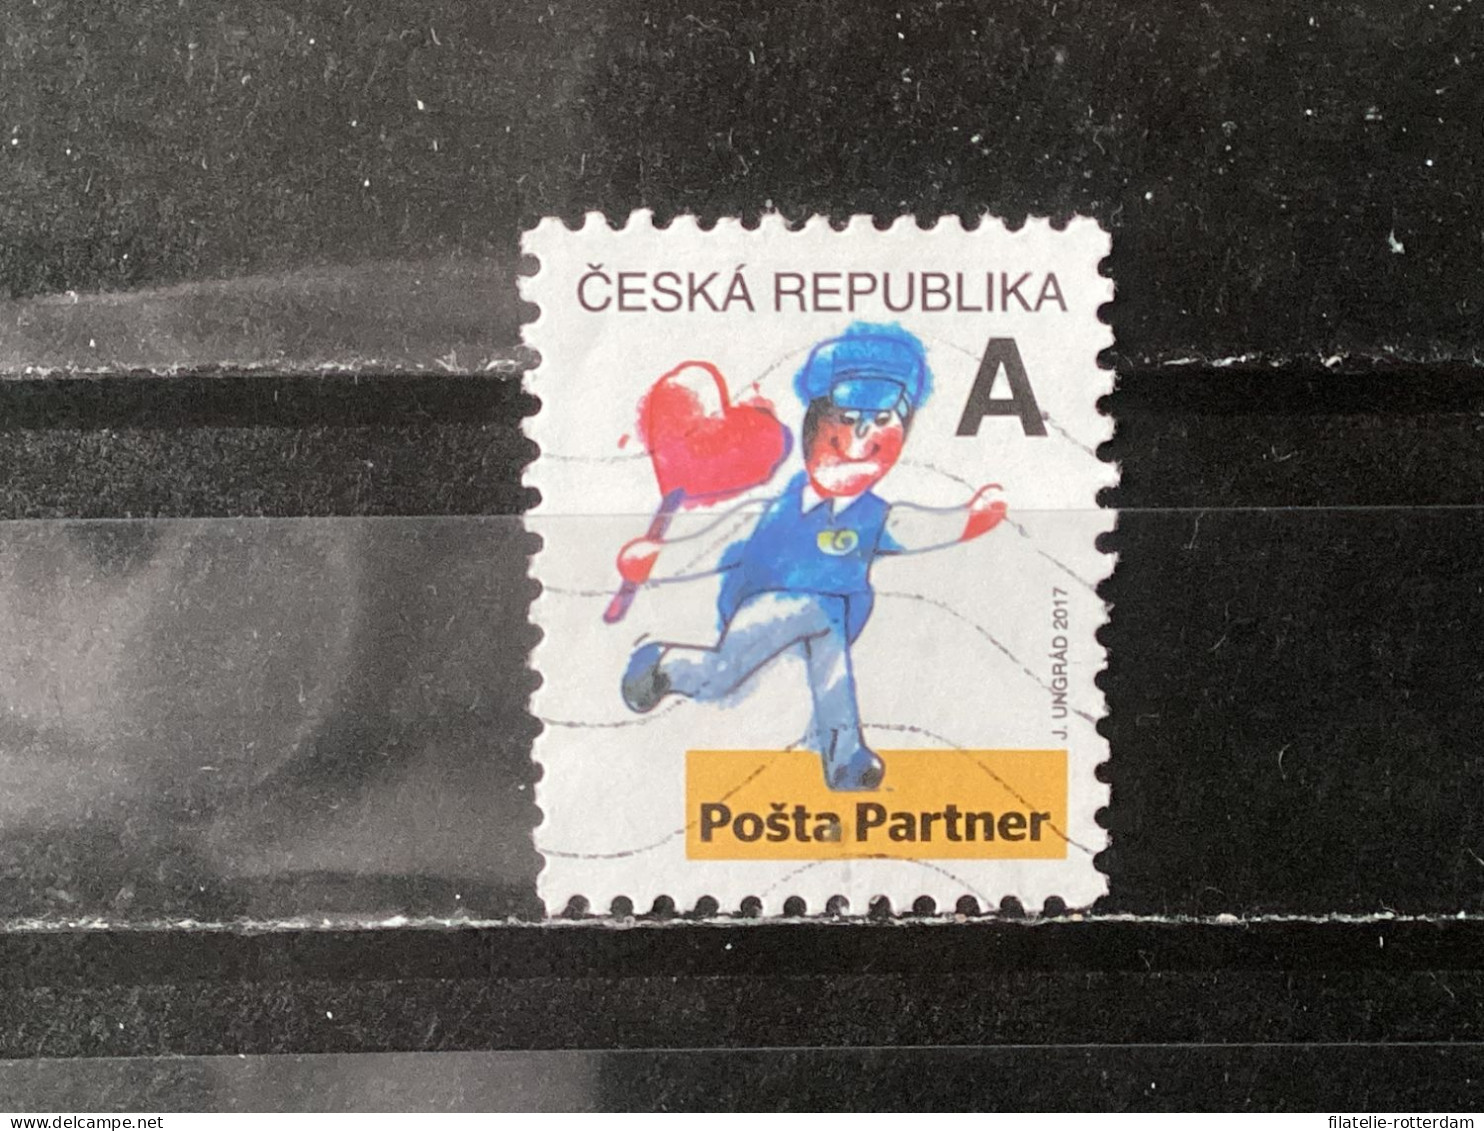 Czech Republic / Tsjechië - Partner Post Office (A) 2017 - Gebruikt